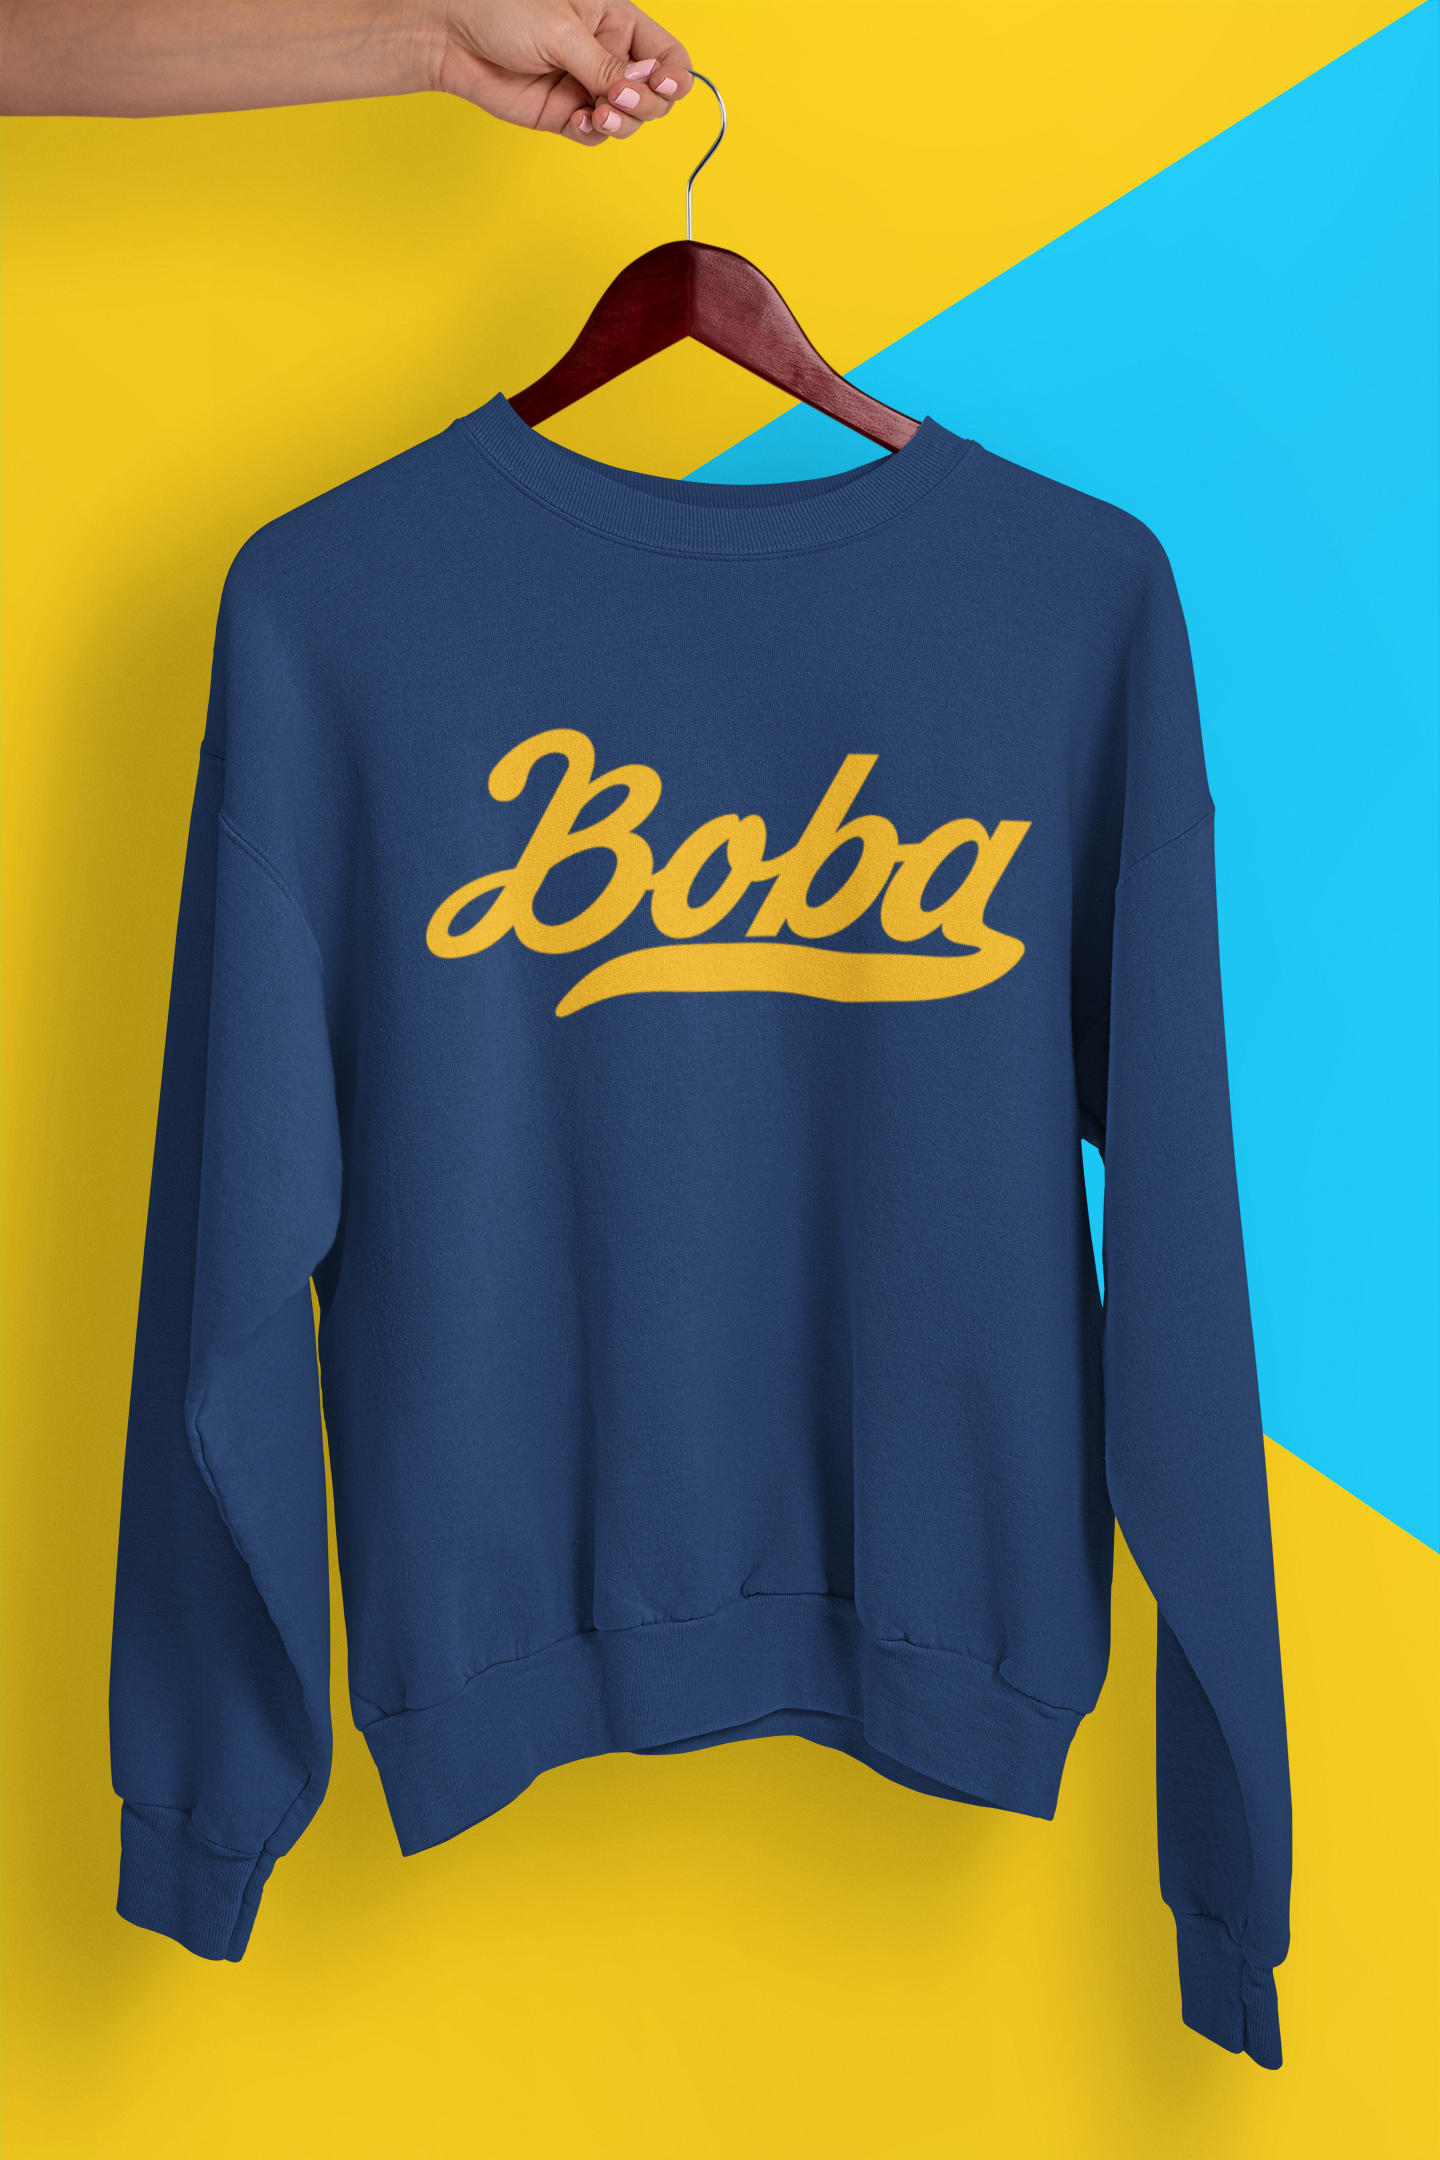 Cal Boba Sweater (Unisex) - CollegeBoba